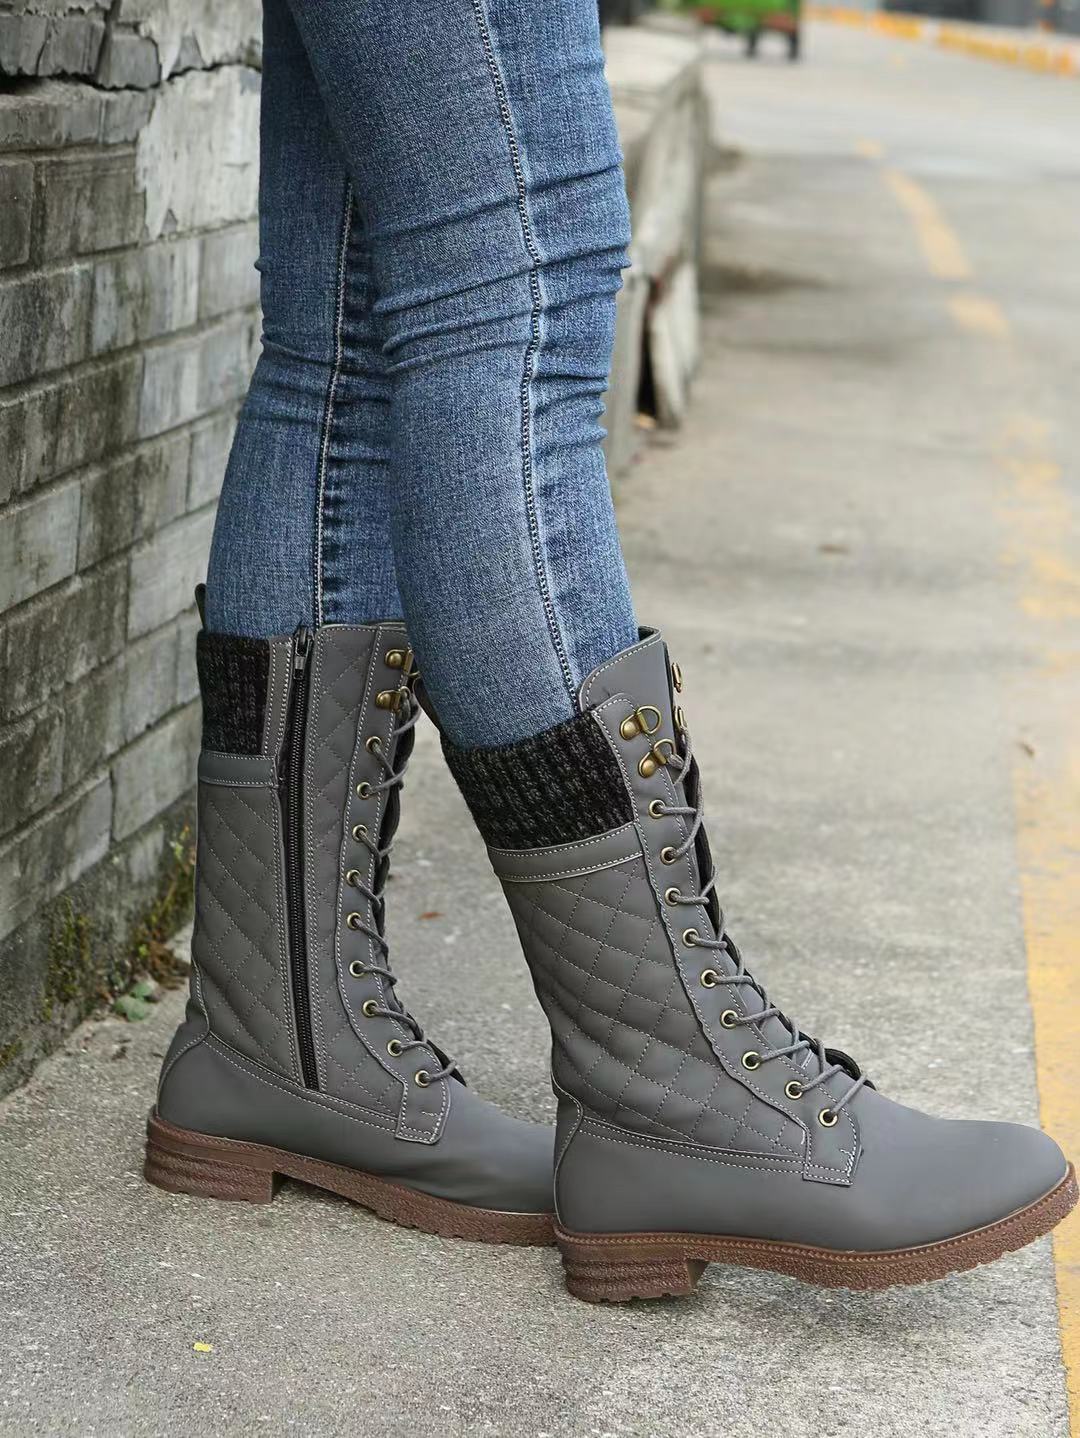 Women's Leather Snow Boots Mid-Calf Flat Heel